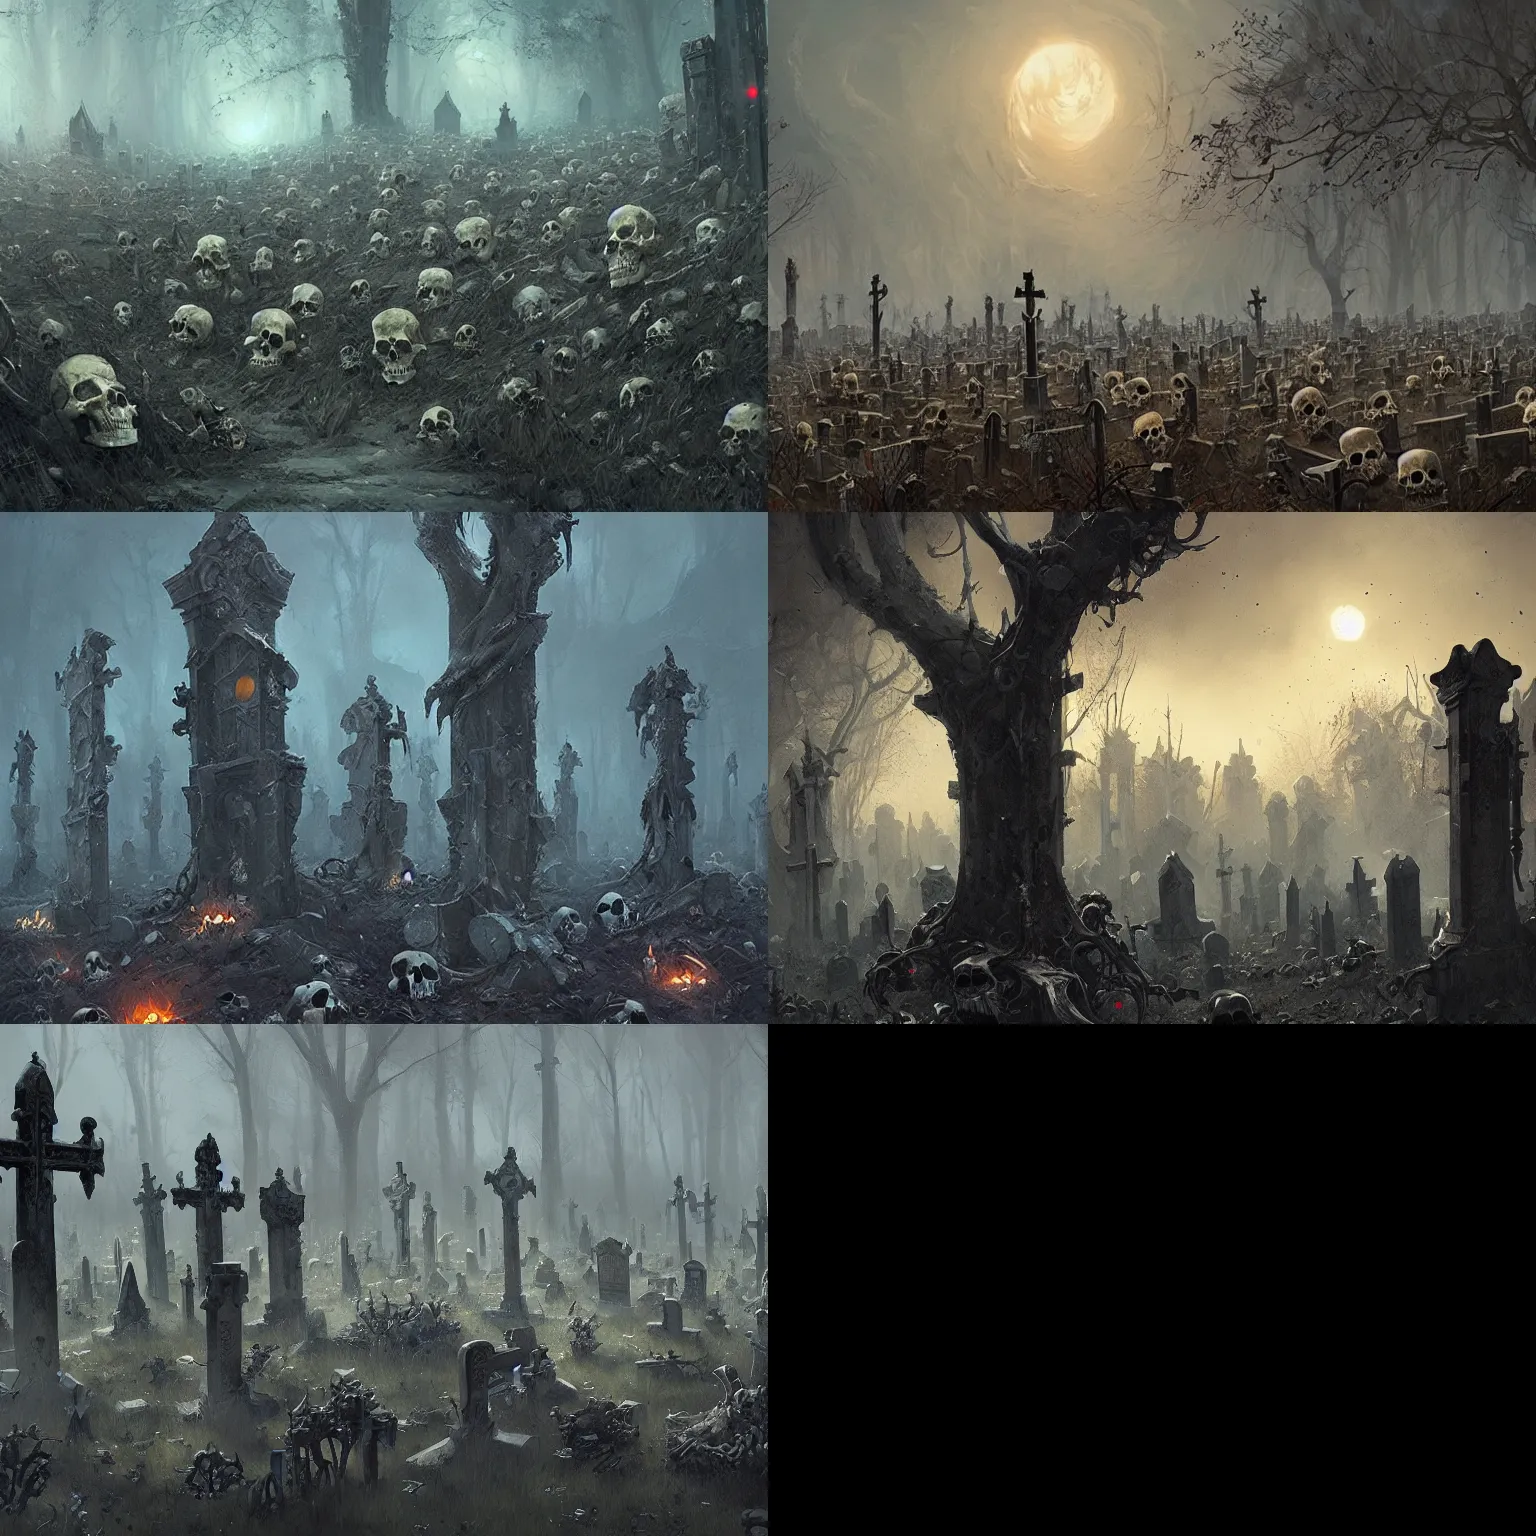 Prompt: a graveyard of skulls, Greg Rutkowski